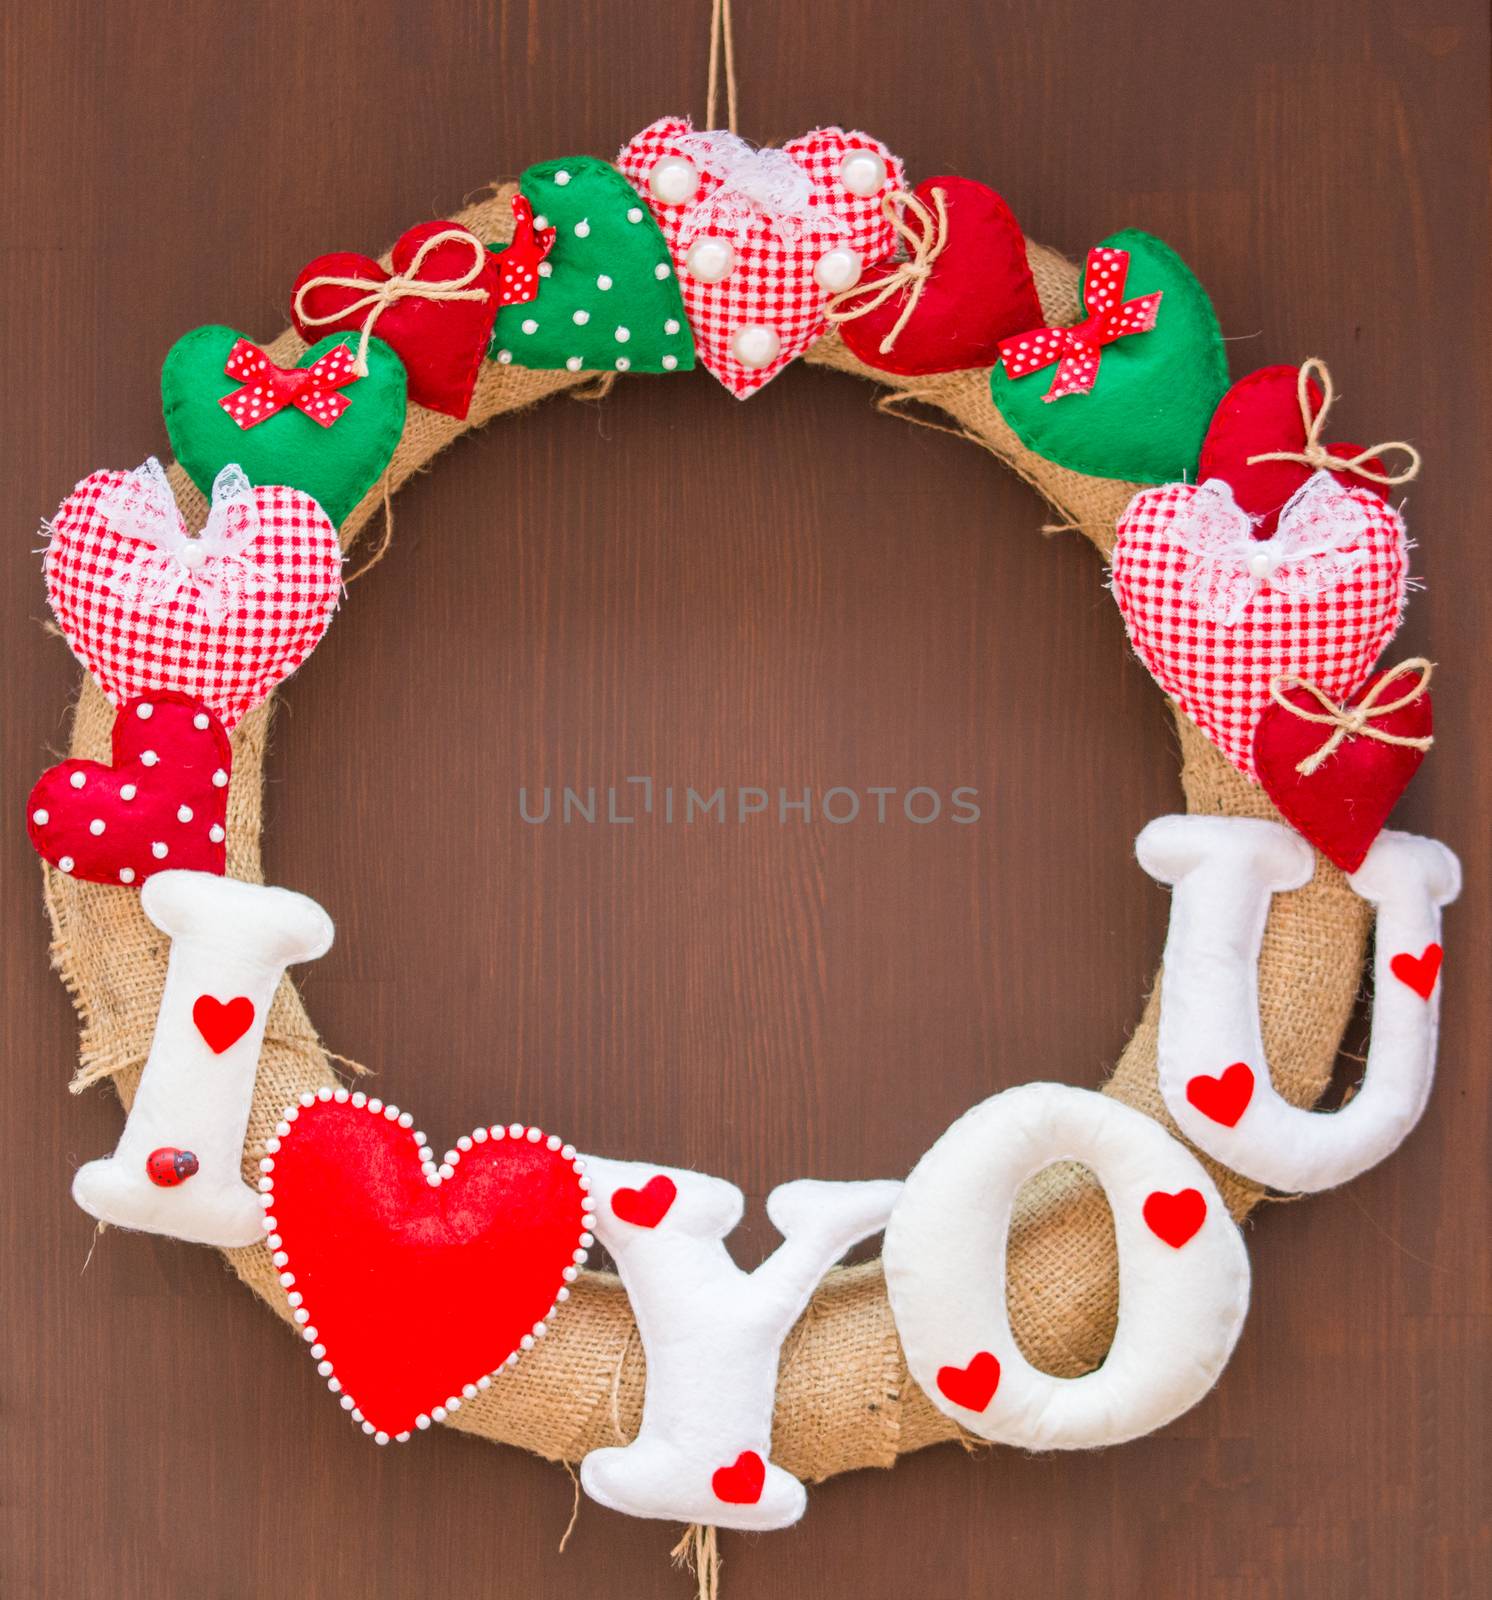 Valentine's Day ornament by yebeka